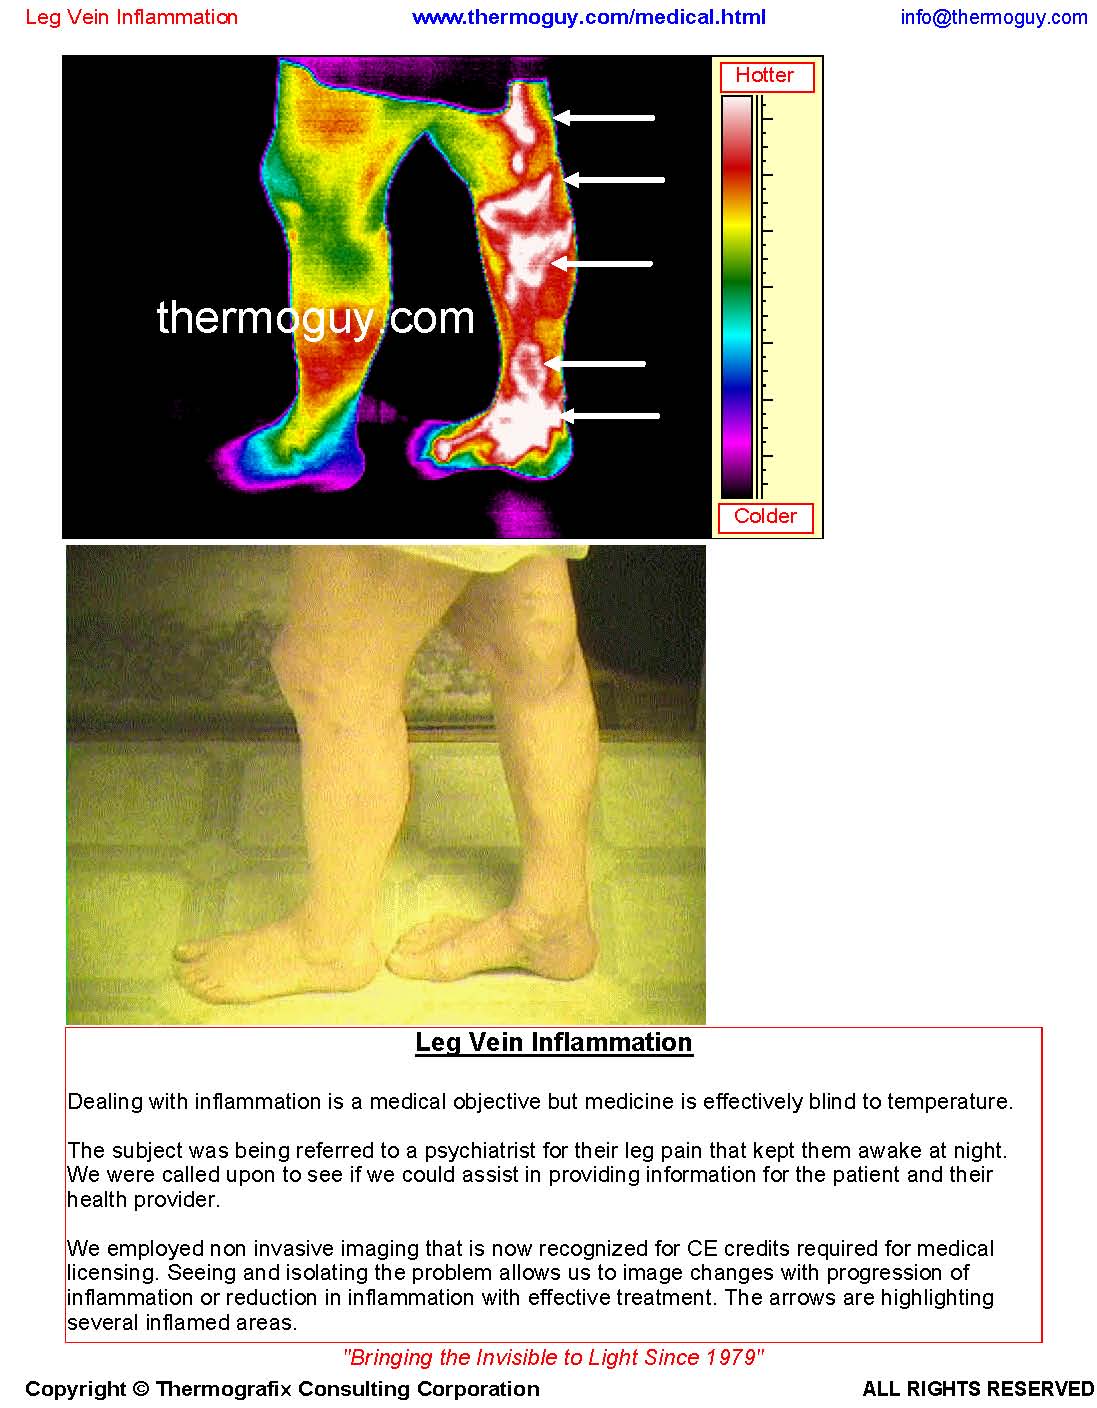 20121116-Leg Vein Inflammation